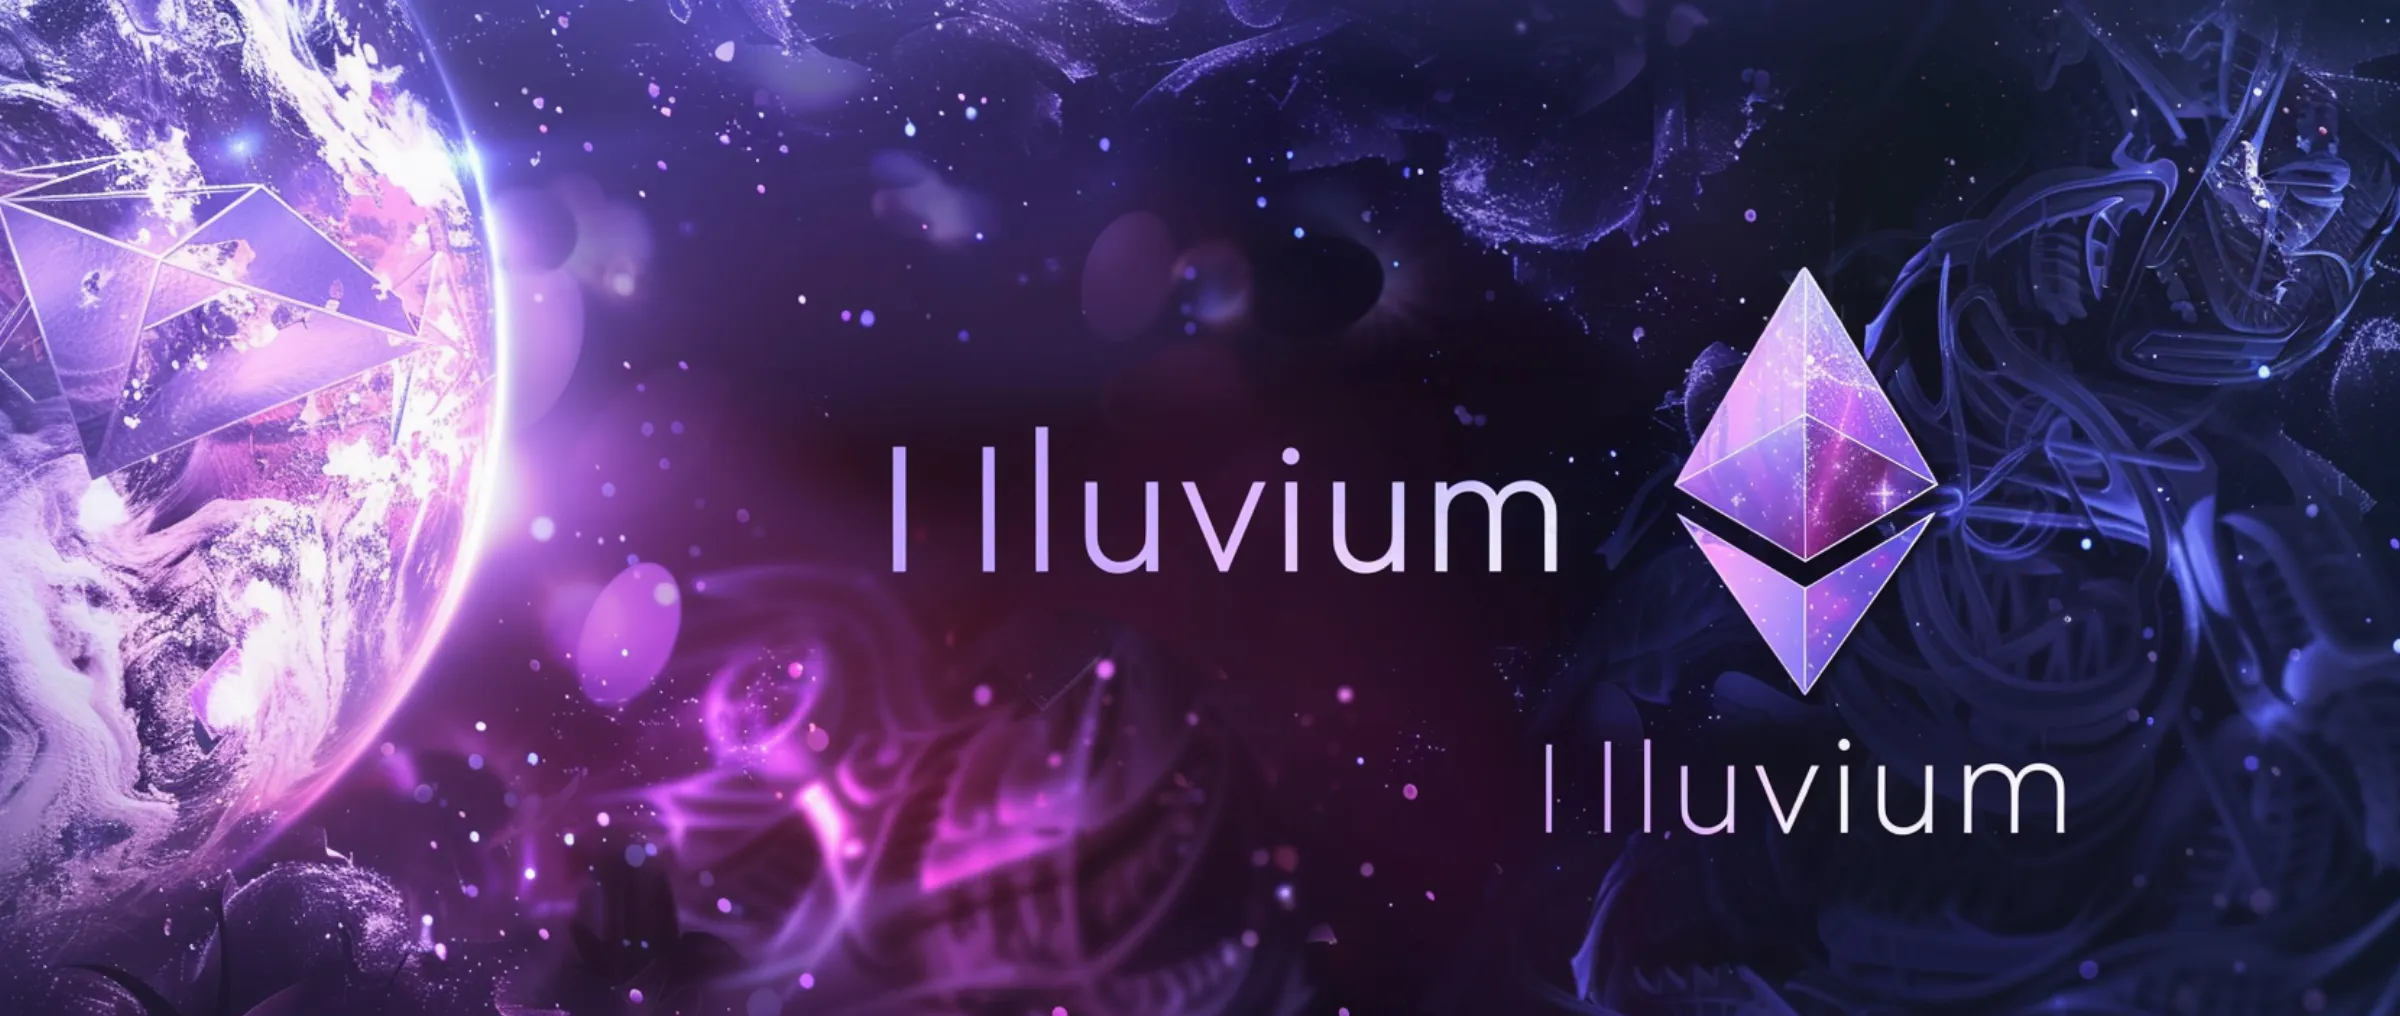 Illuvium Labs привлекает 12 миллионов долларов инвестиций